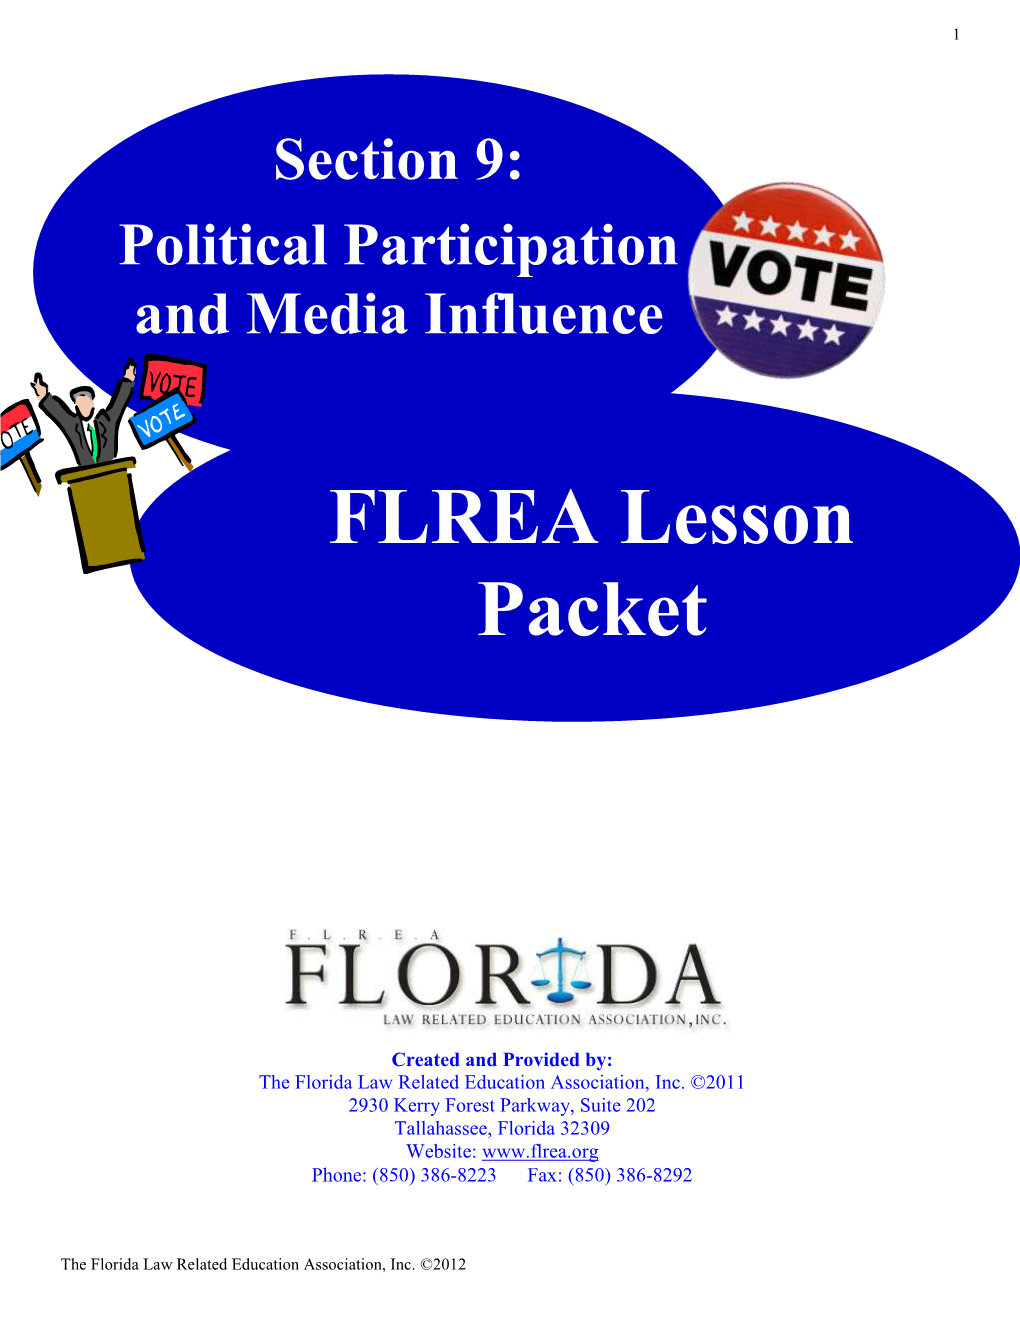 FLREA Lesson Packet